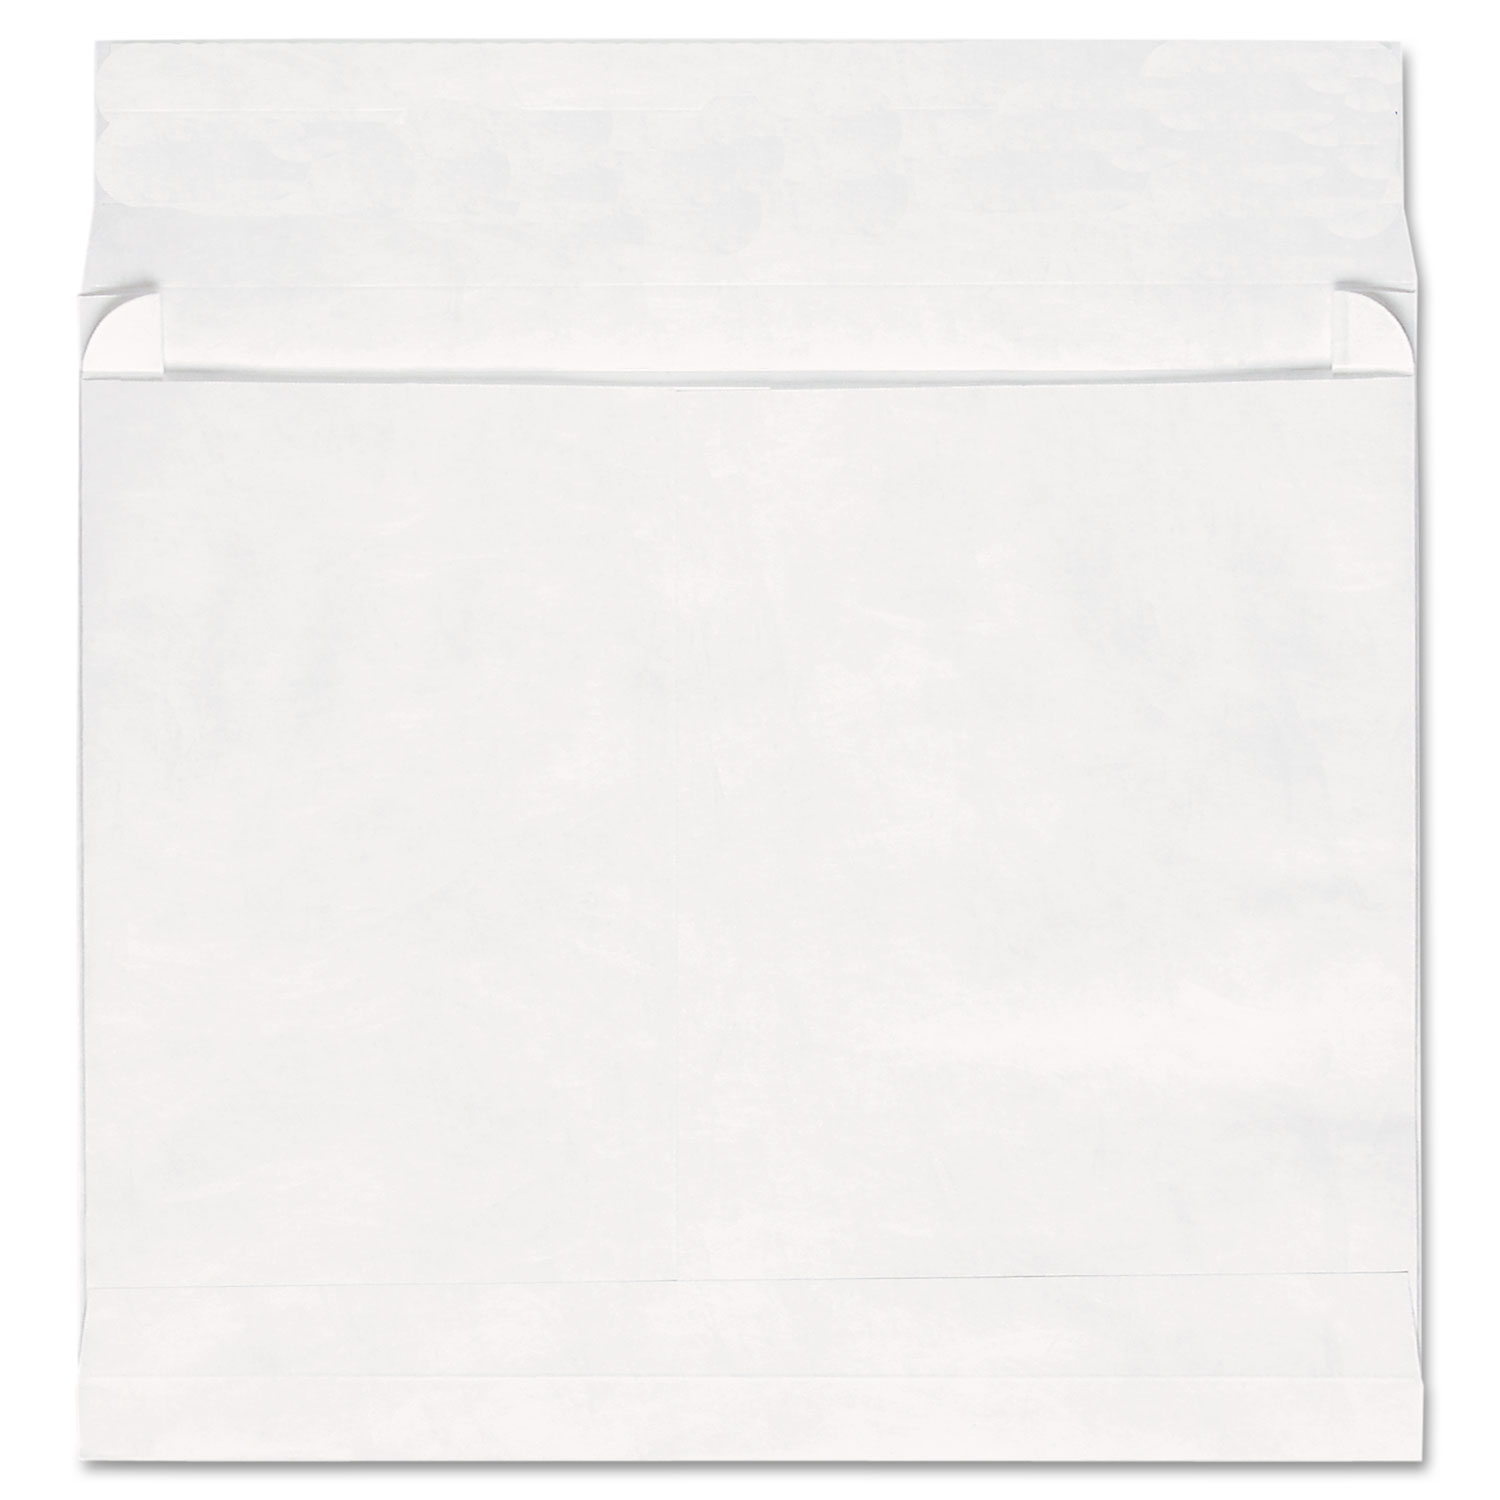 Tyvek Expansion Envelope, 10 x 13, White, 100/Box